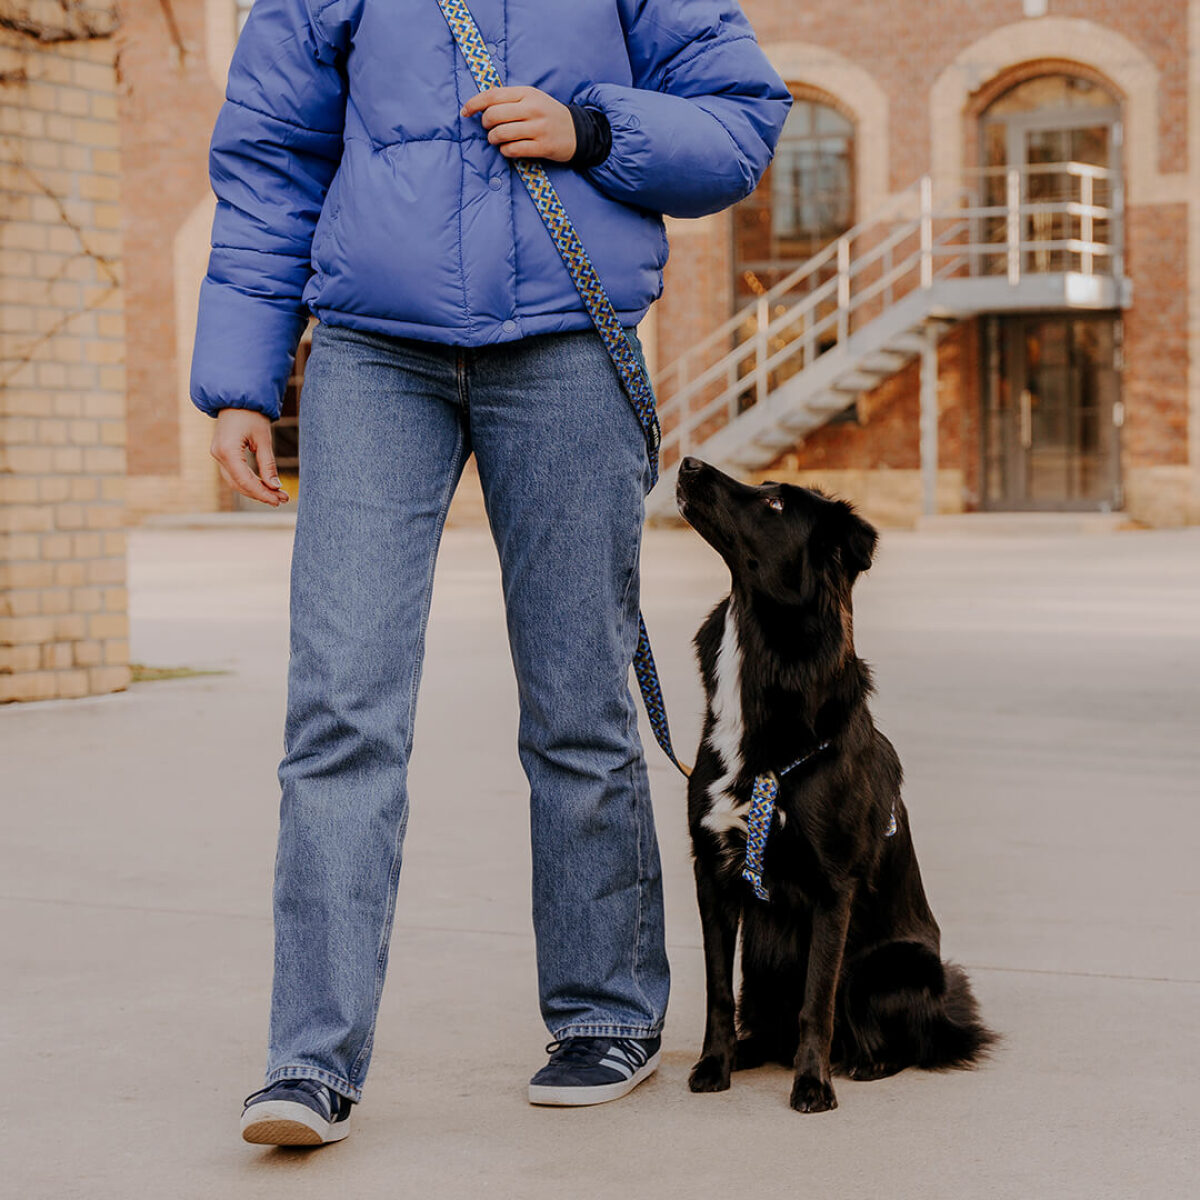 Leash and harness with dog Kunterbunt is 5-way adjustable in mocha/blue